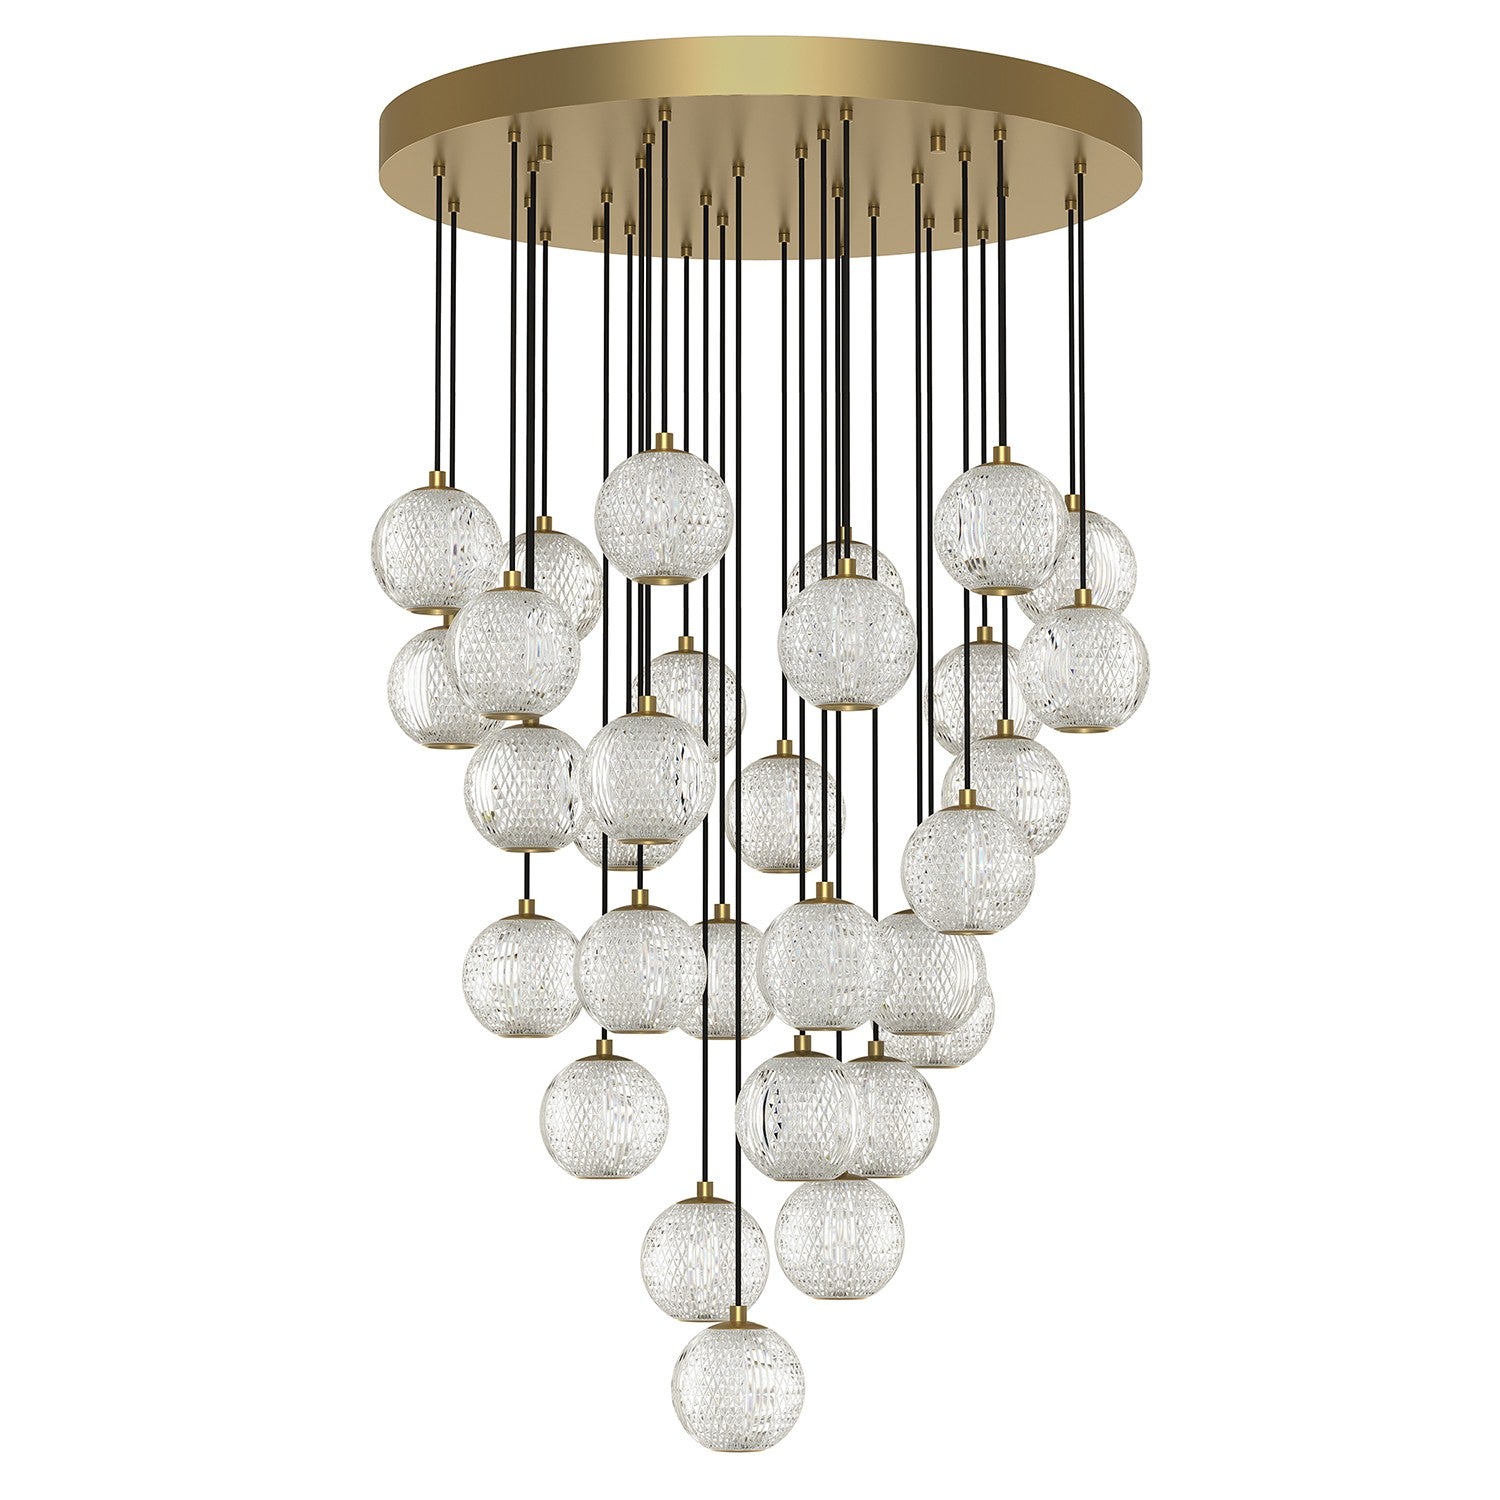 Alora Canada - LED Lantern - Marni - Natural Brass- Union Lighting Luminaires Decor